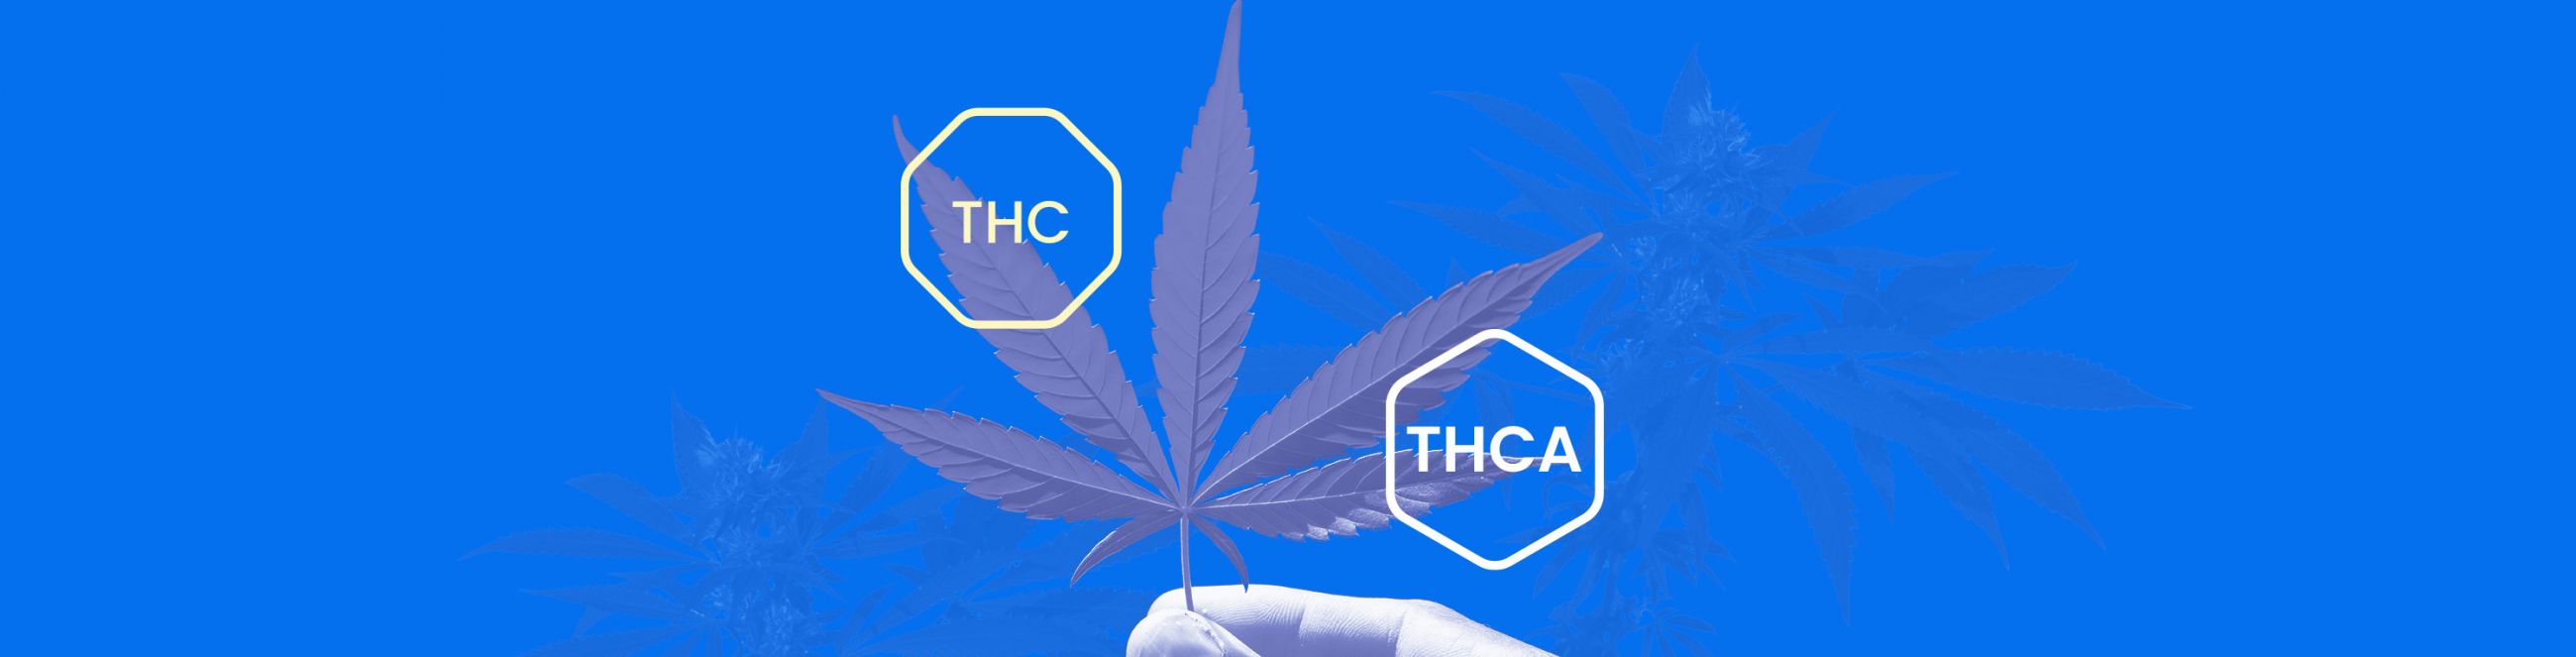 What is THCA? - THC vs. THCA